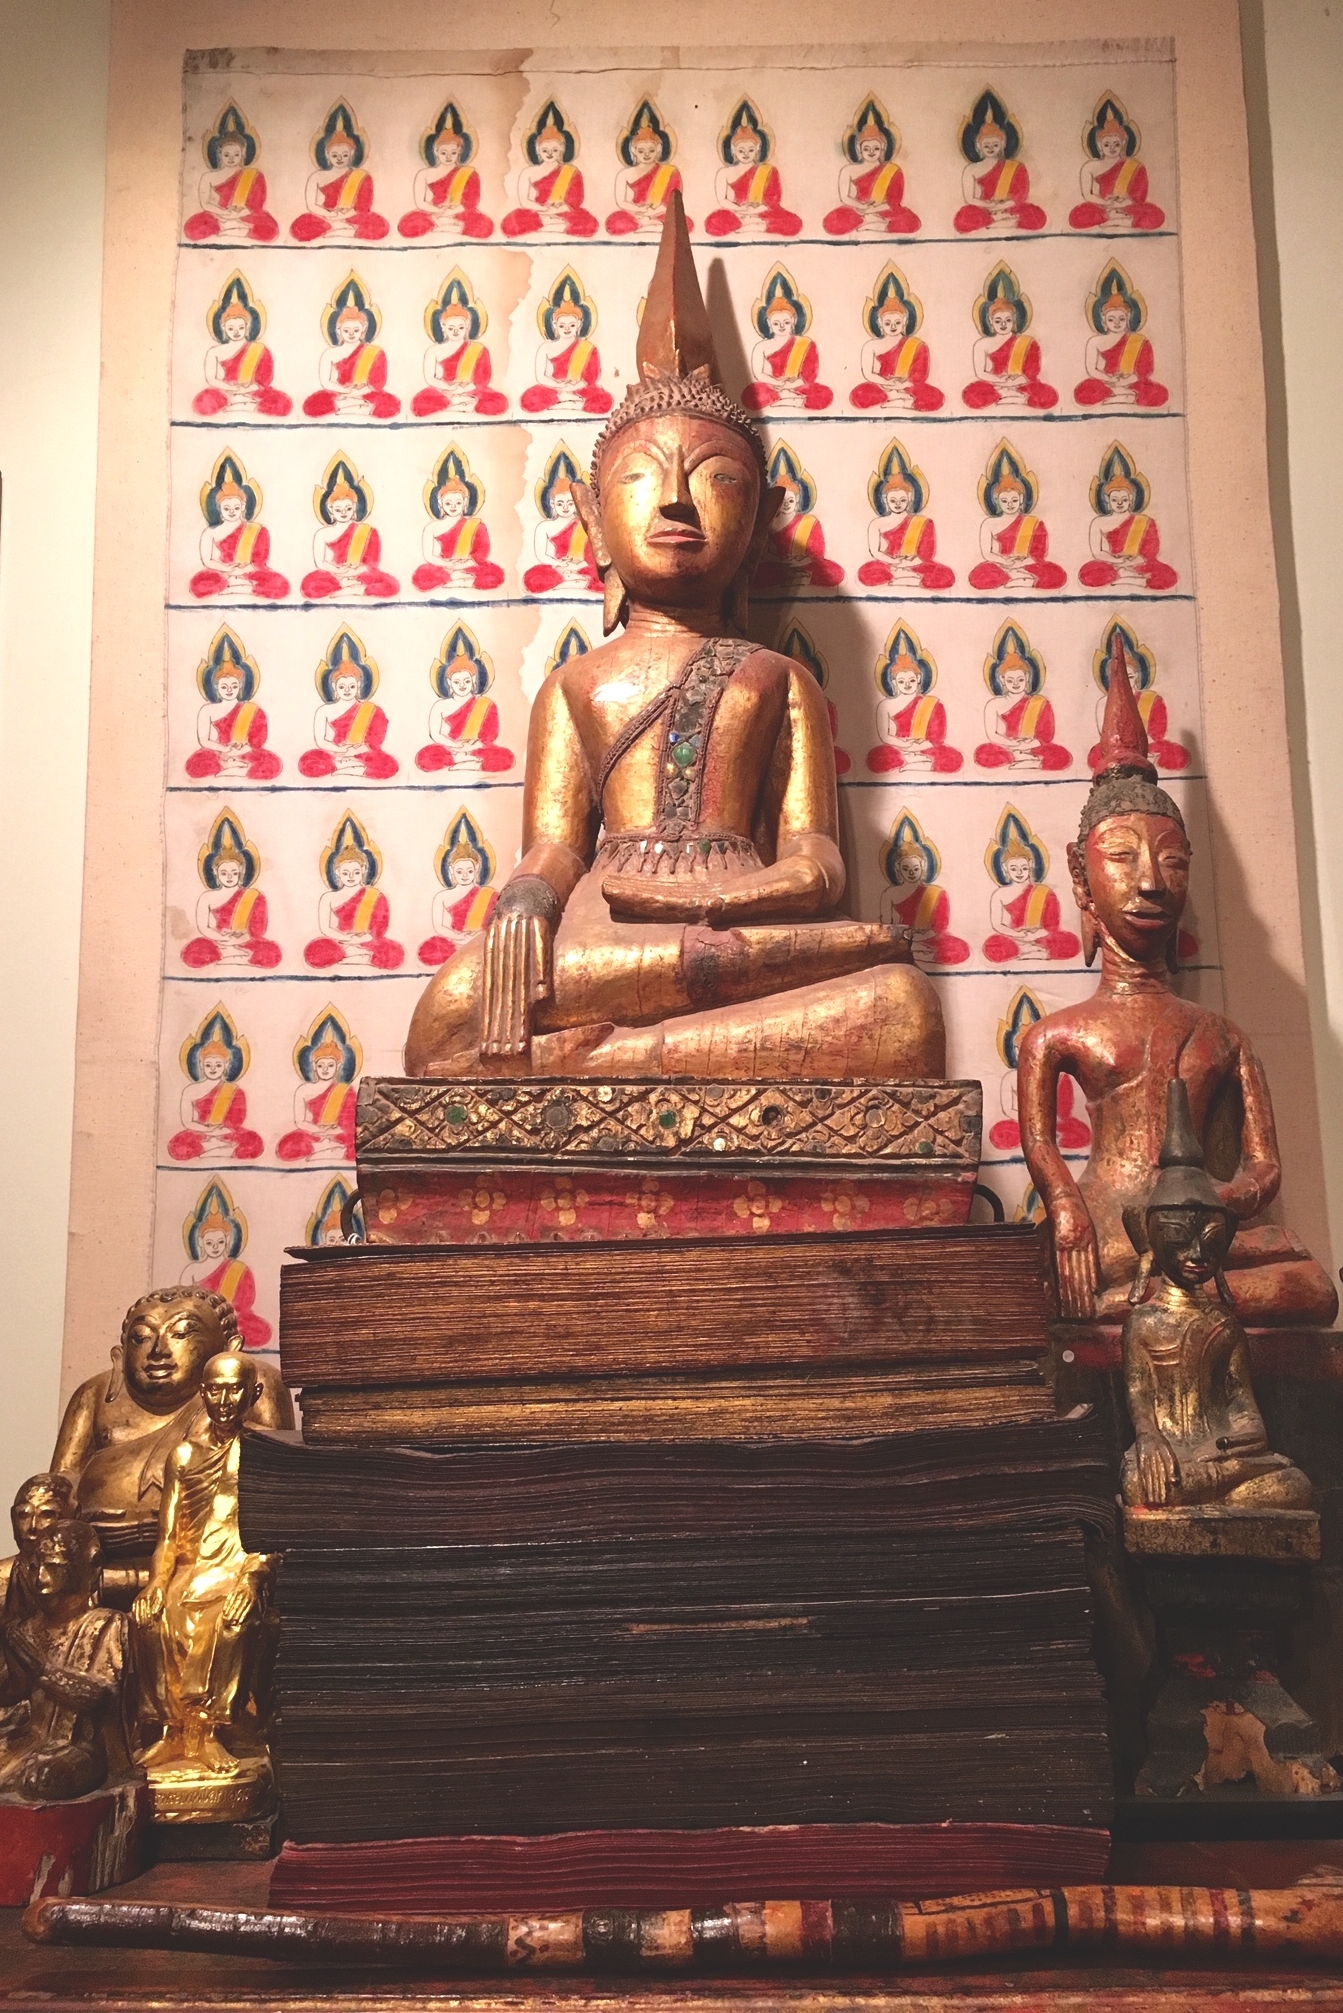 Buddhas, Buddhist manuscripts and painting of Buddhas, Siam, Burma, Laos, circa 1900 to early 20th century.